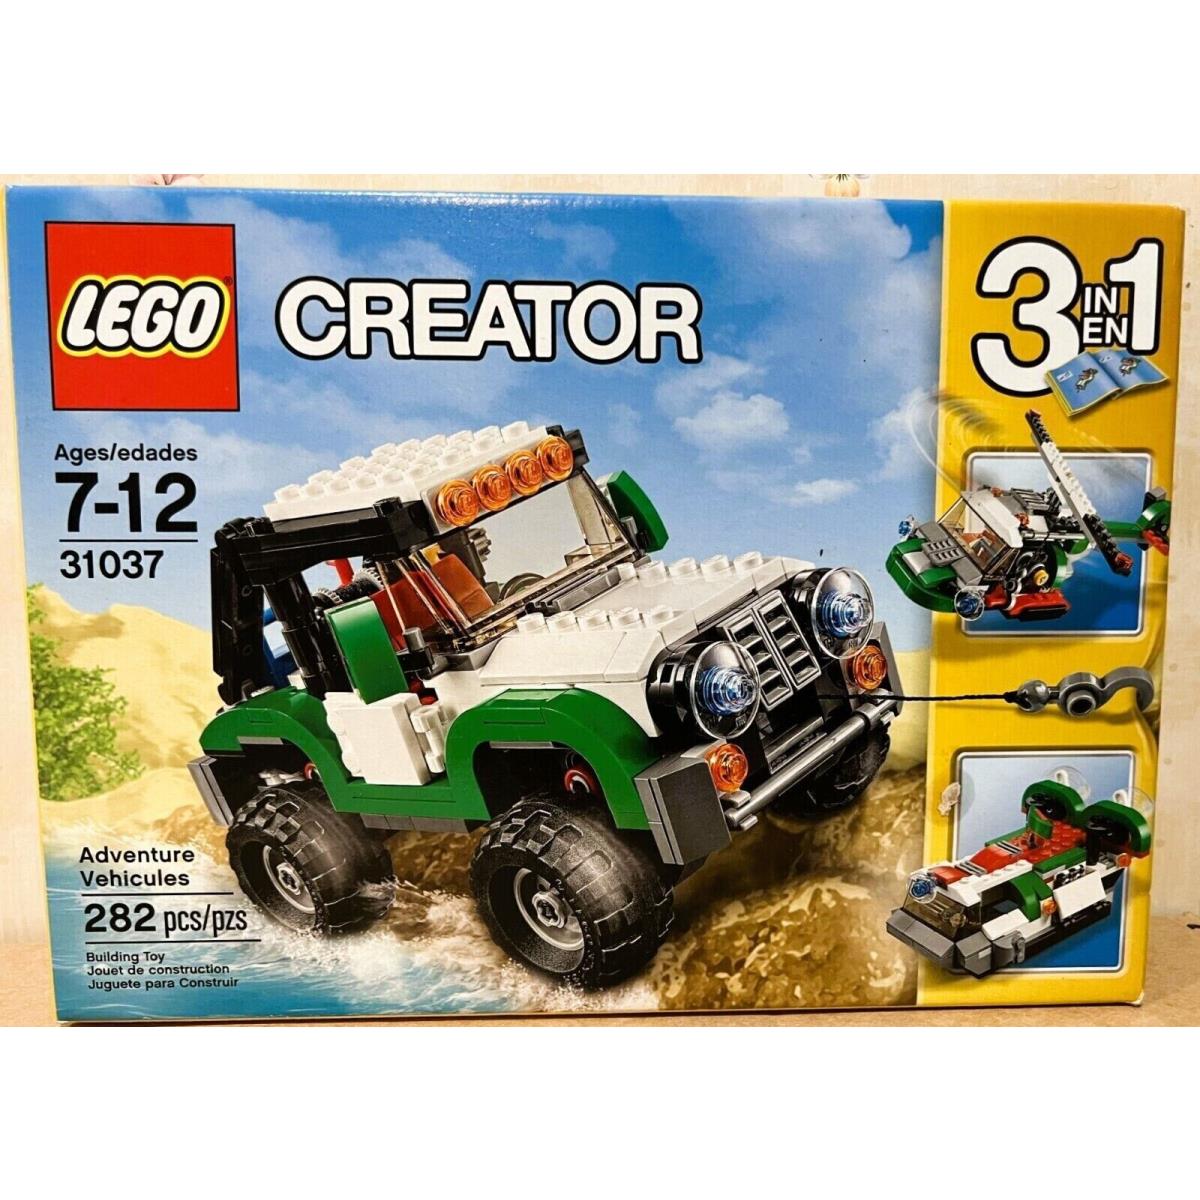 Lego Creator Adventure Vehicles 31037 Building Kit 282 Pcs Car Model Playset